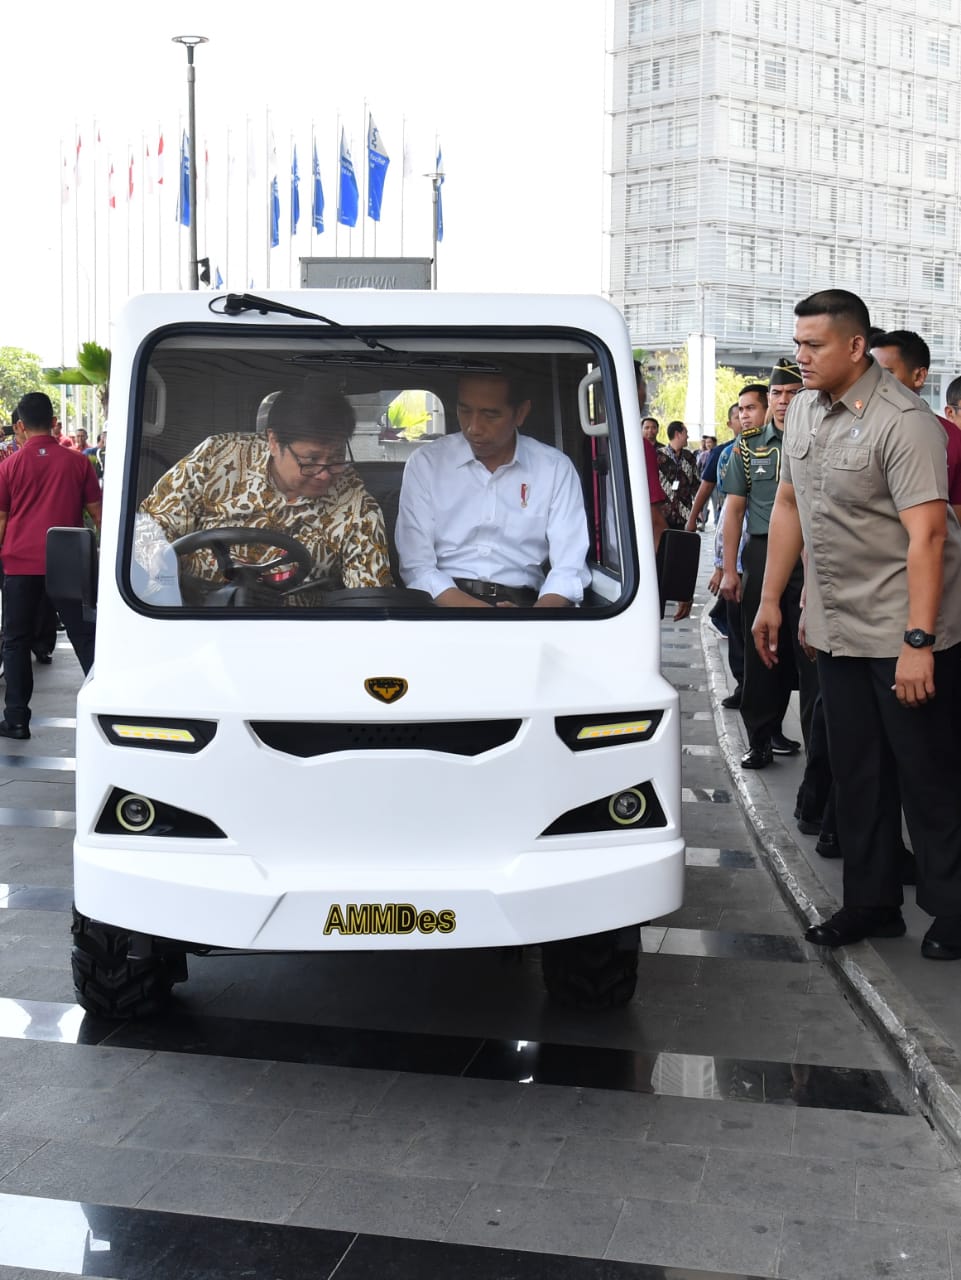 Presiden Joko Widodo mendorong industri otomotif dalam negeri untuk terus bekerja keras dan menelurkan inovasi. 

Presiden Jokowi berharap pasar otomotif Indonesia dapat dikuasai oleh industri otomotif dalam negeri.